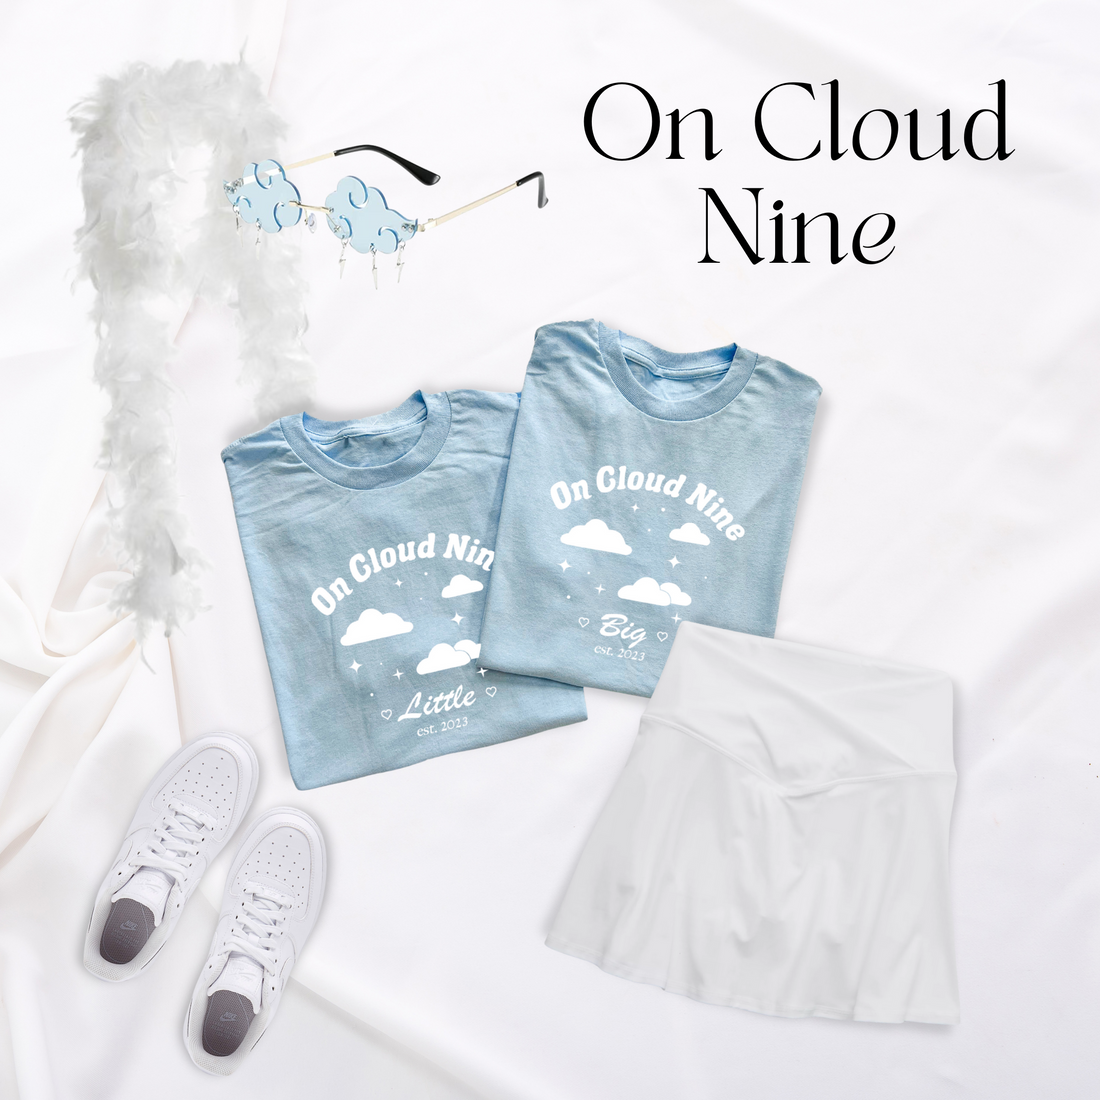 On Cloud Nine: Styling Inspo